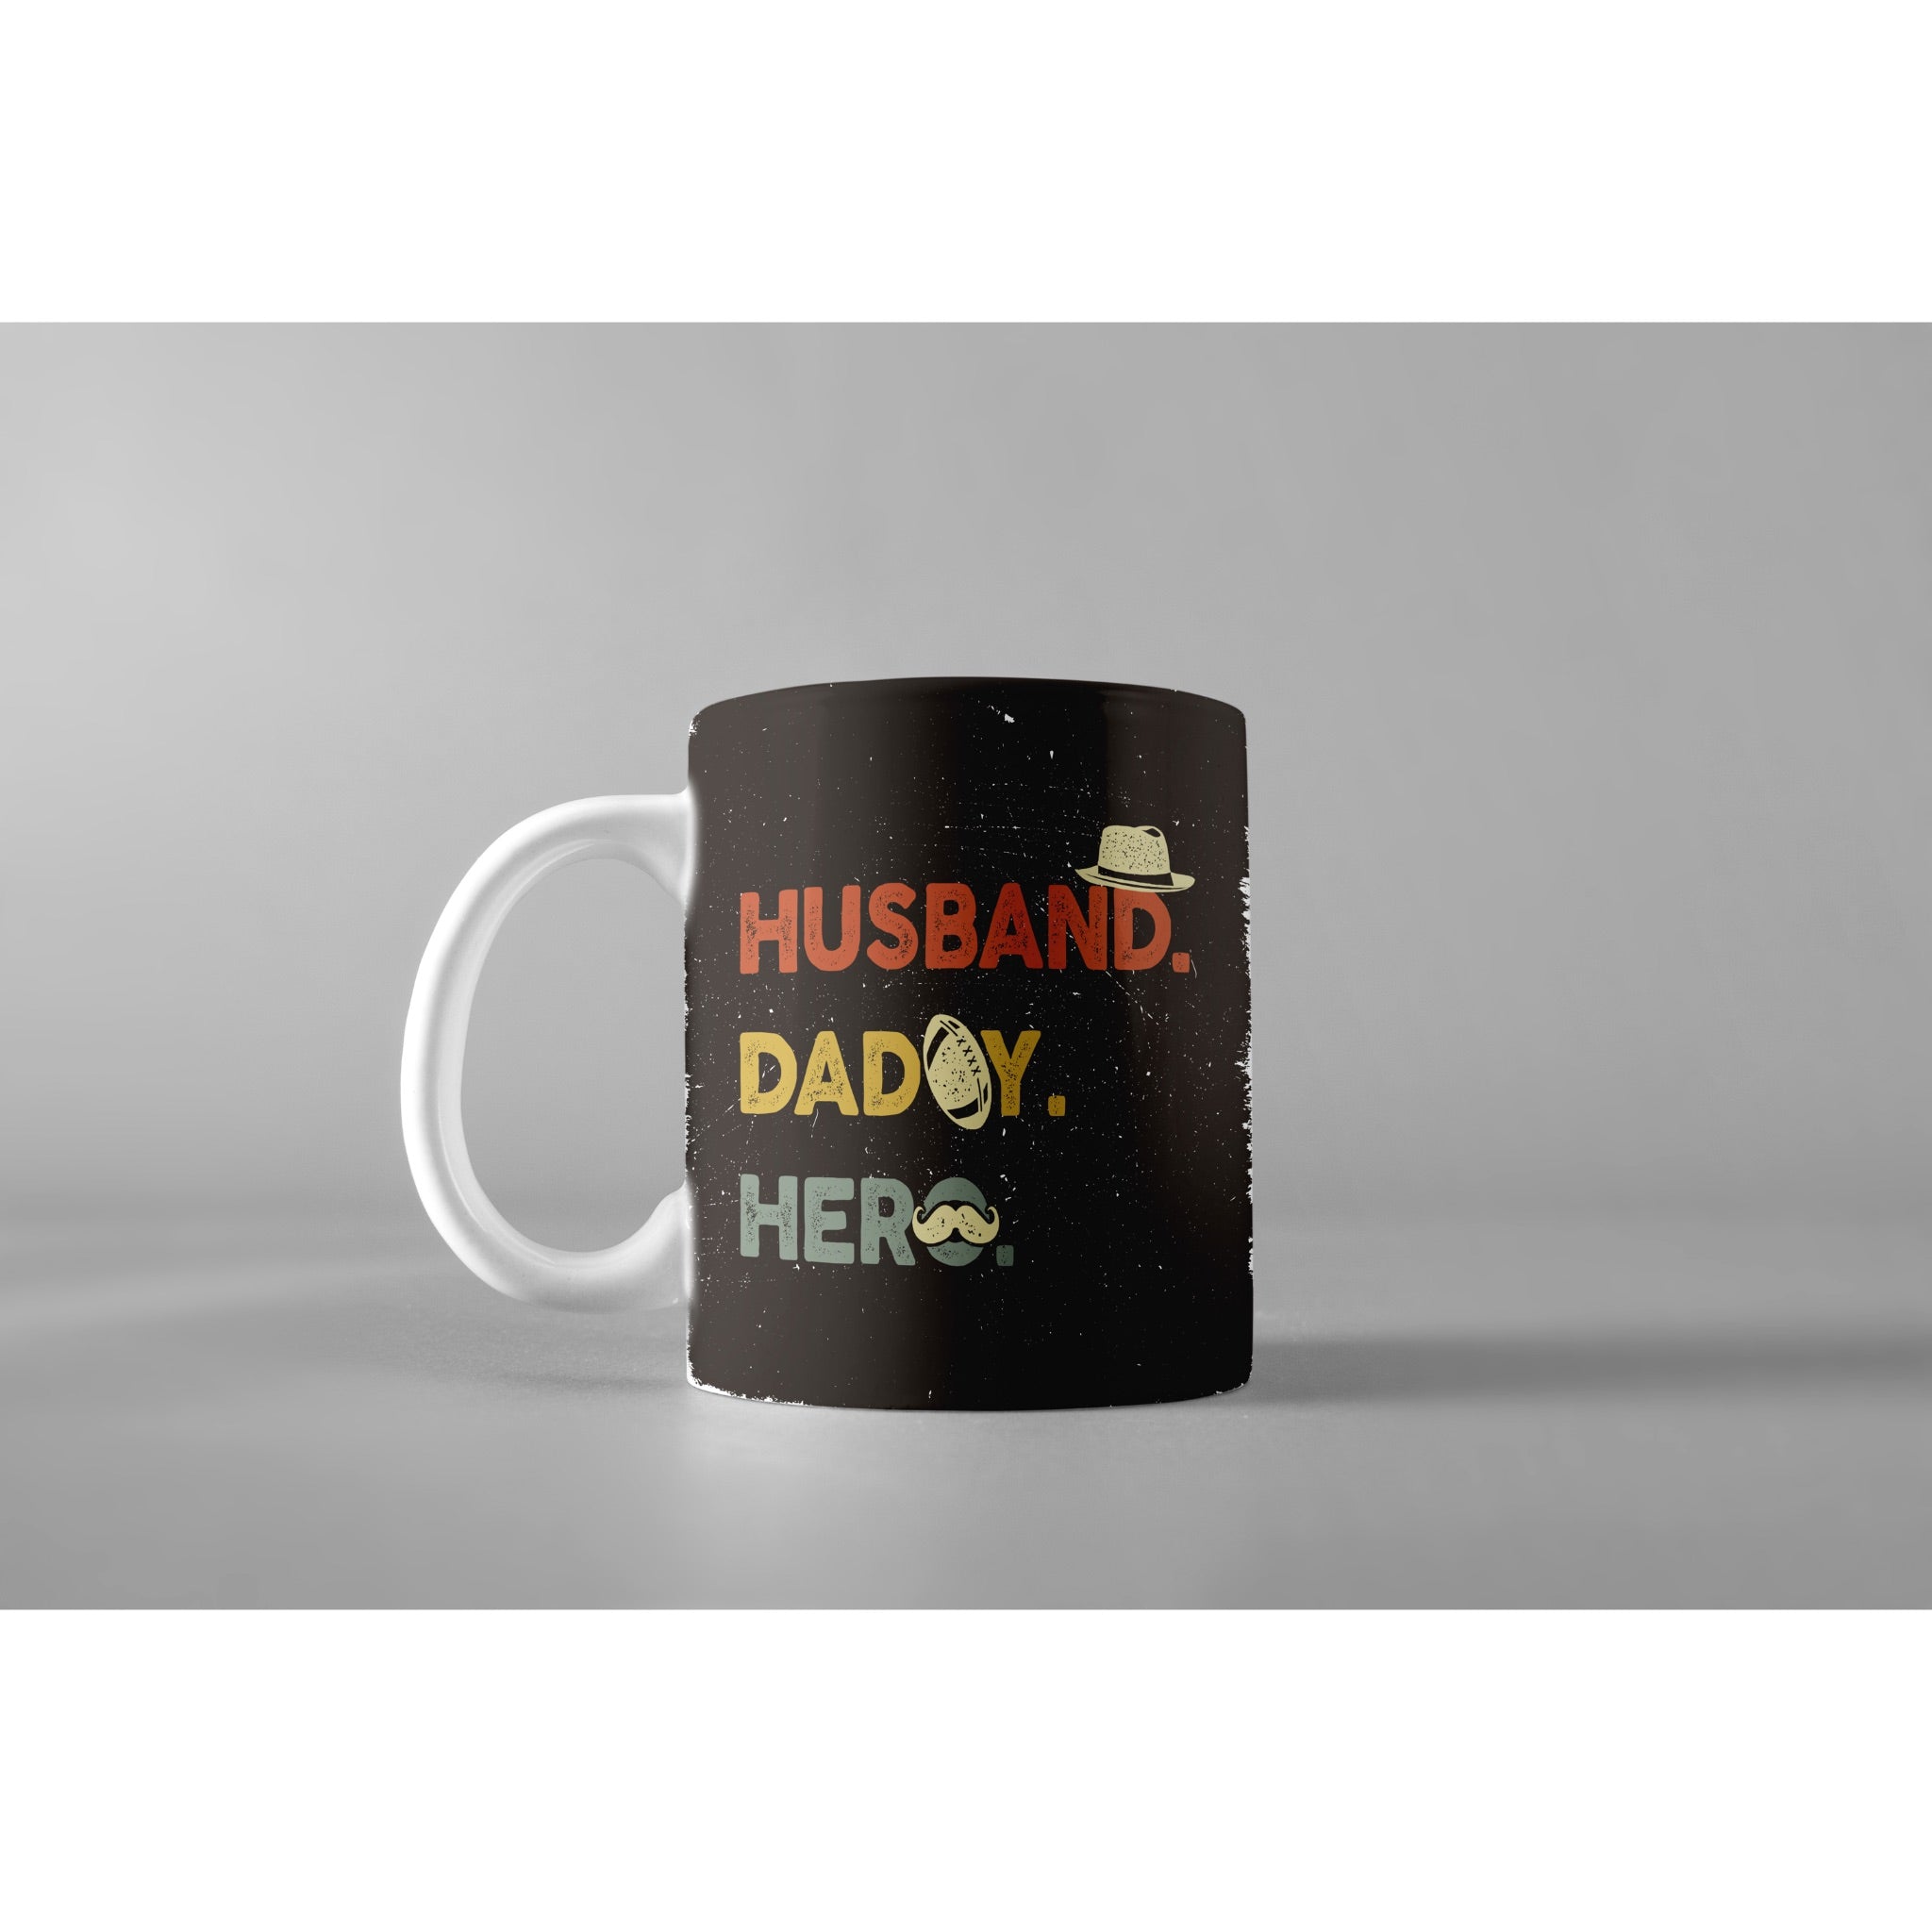 Husband Daddy Hero- Mugs for Father